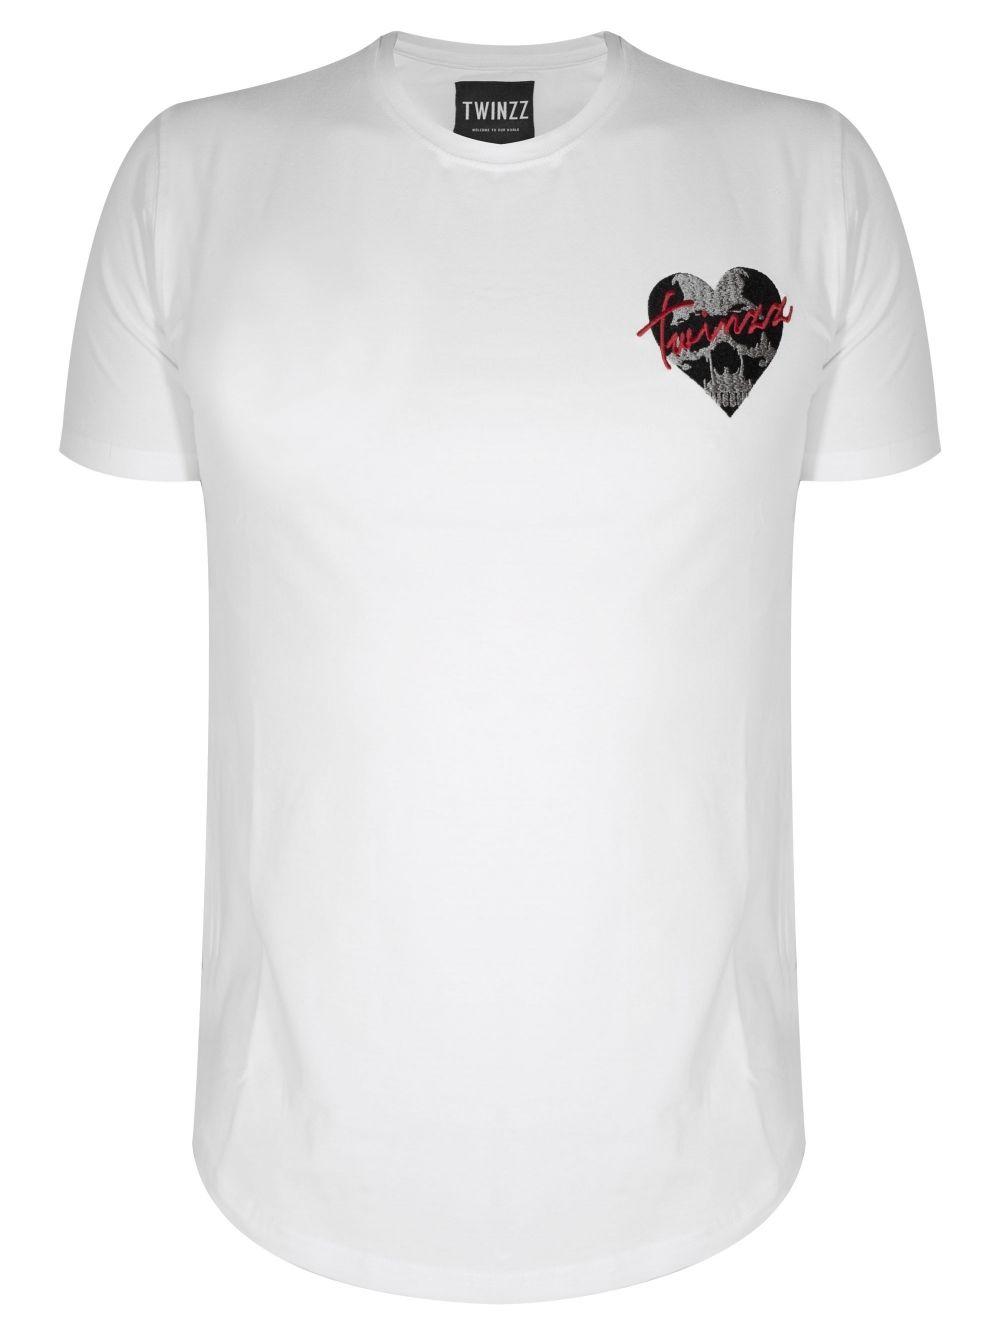 Black and White Heart Logo - Twinzz White Heart Logo T-Shirt - Designerwear